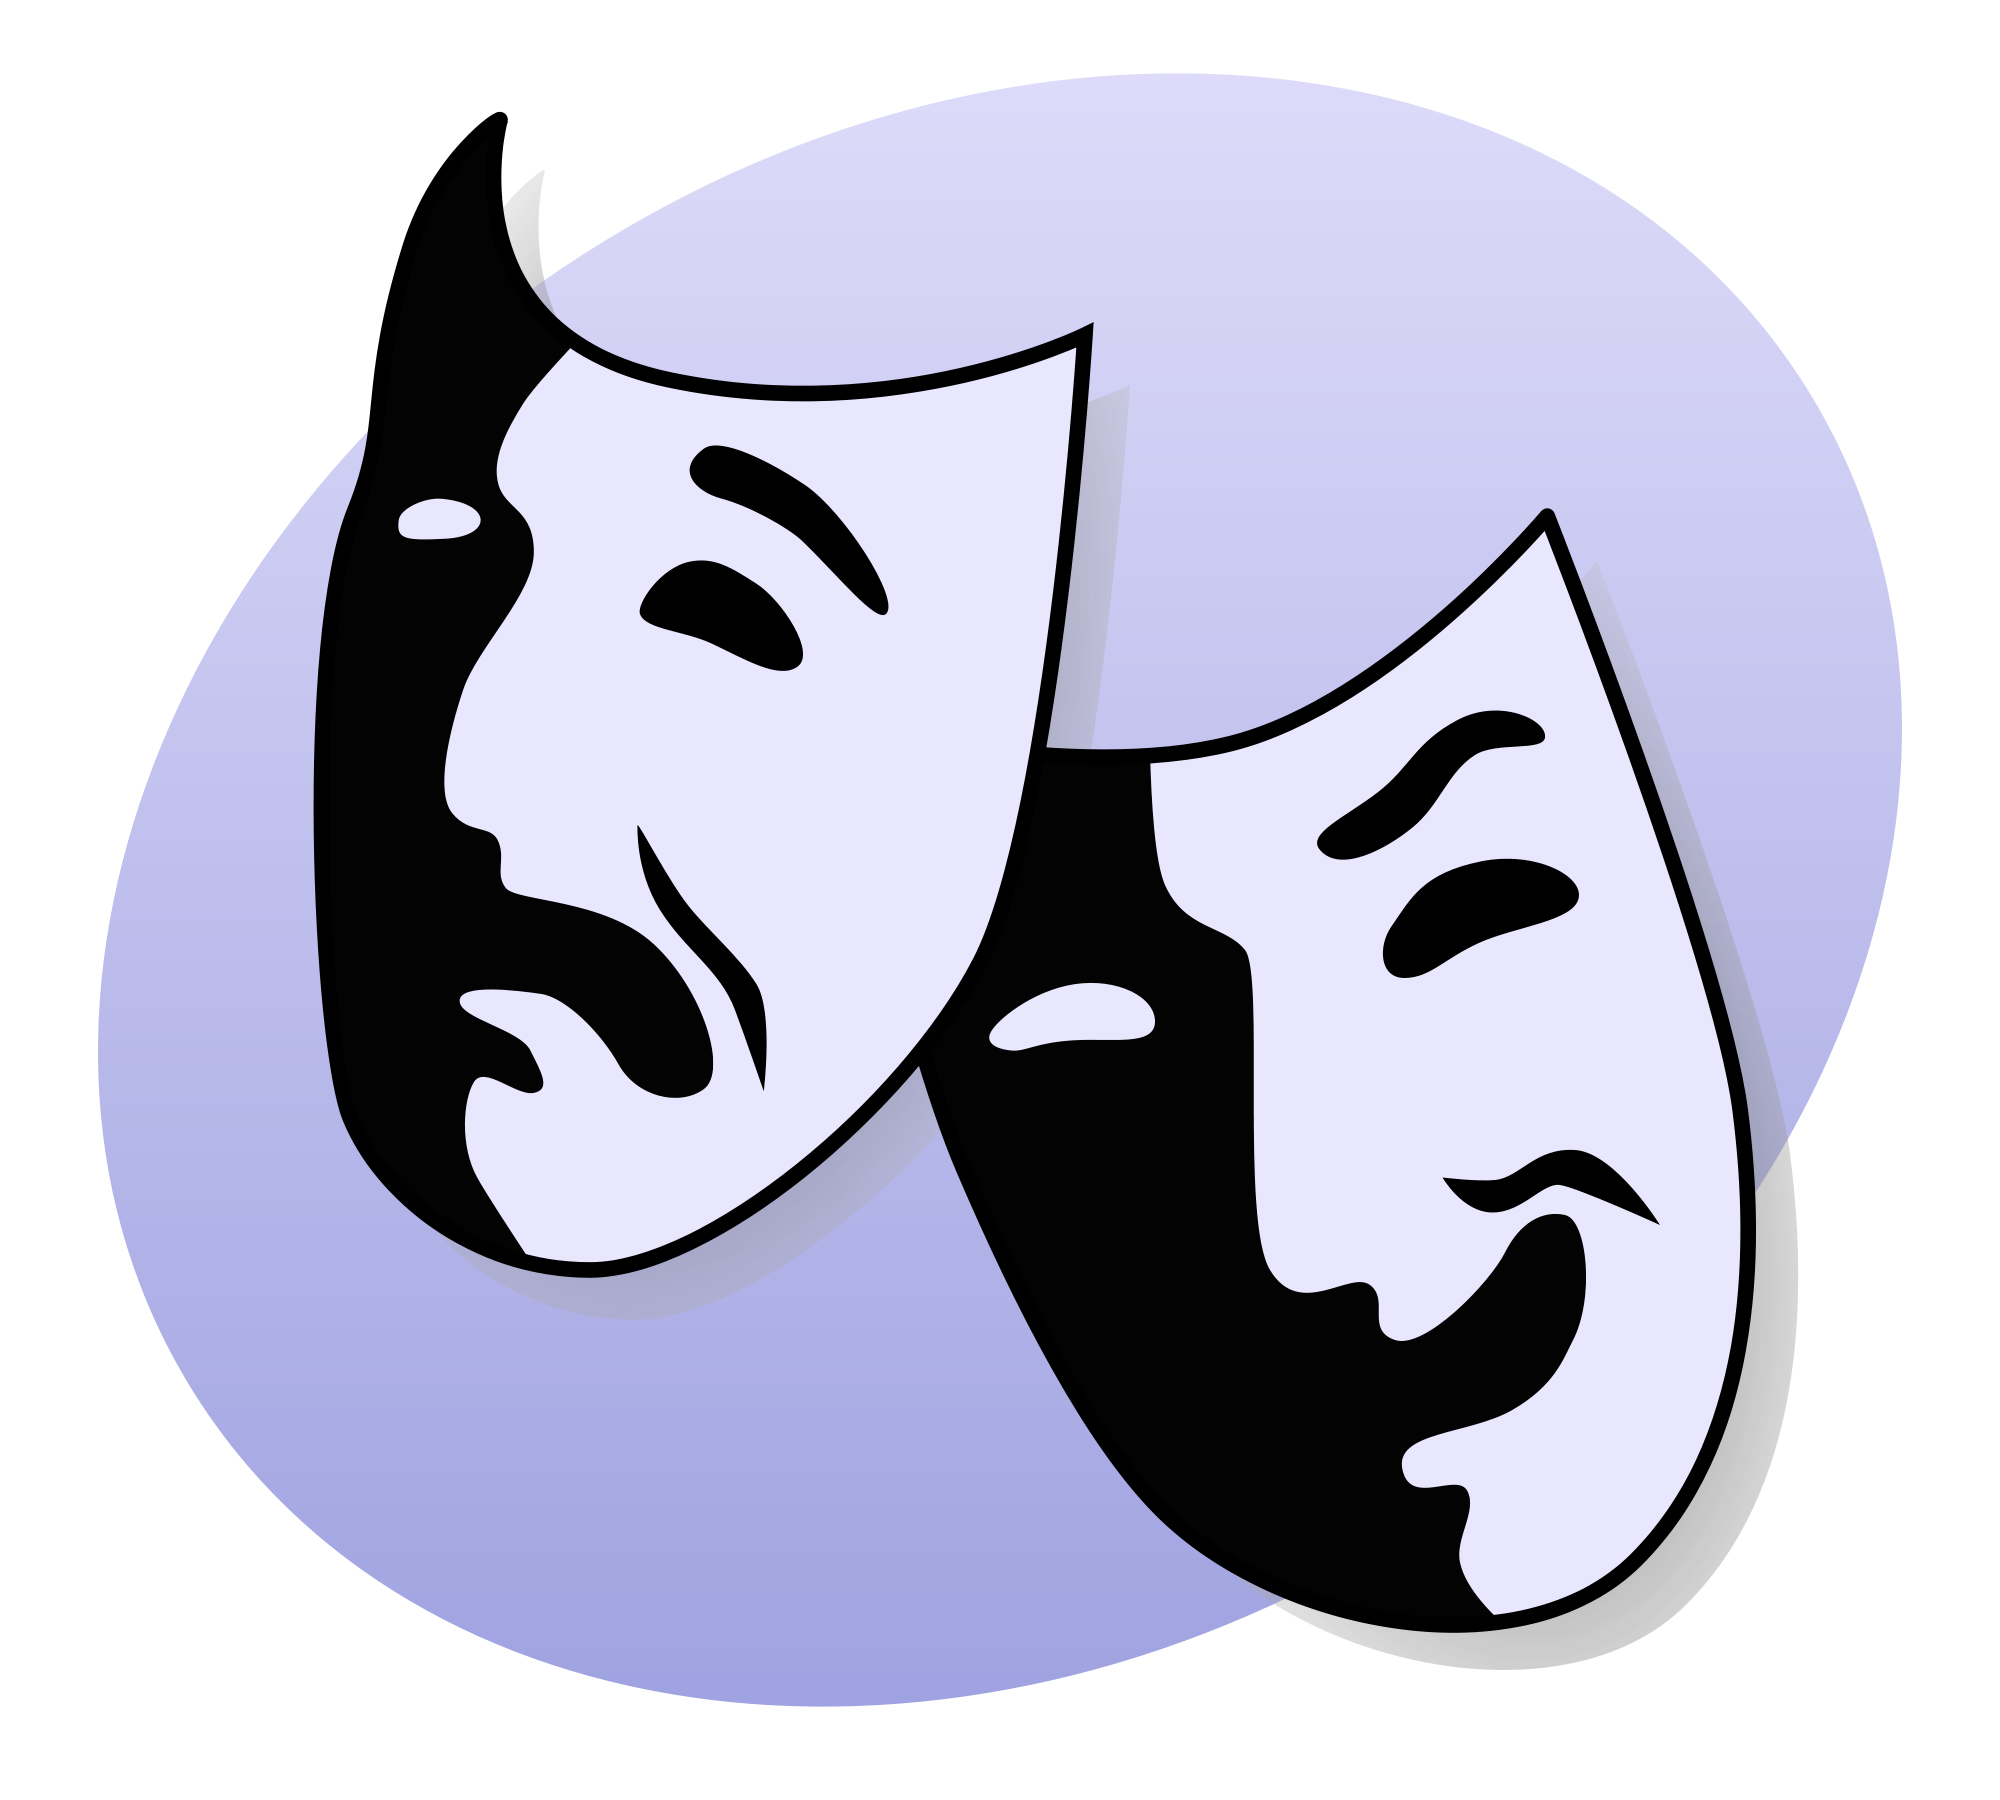 Play (theatre) - Wikipedia, the free encyclopedia